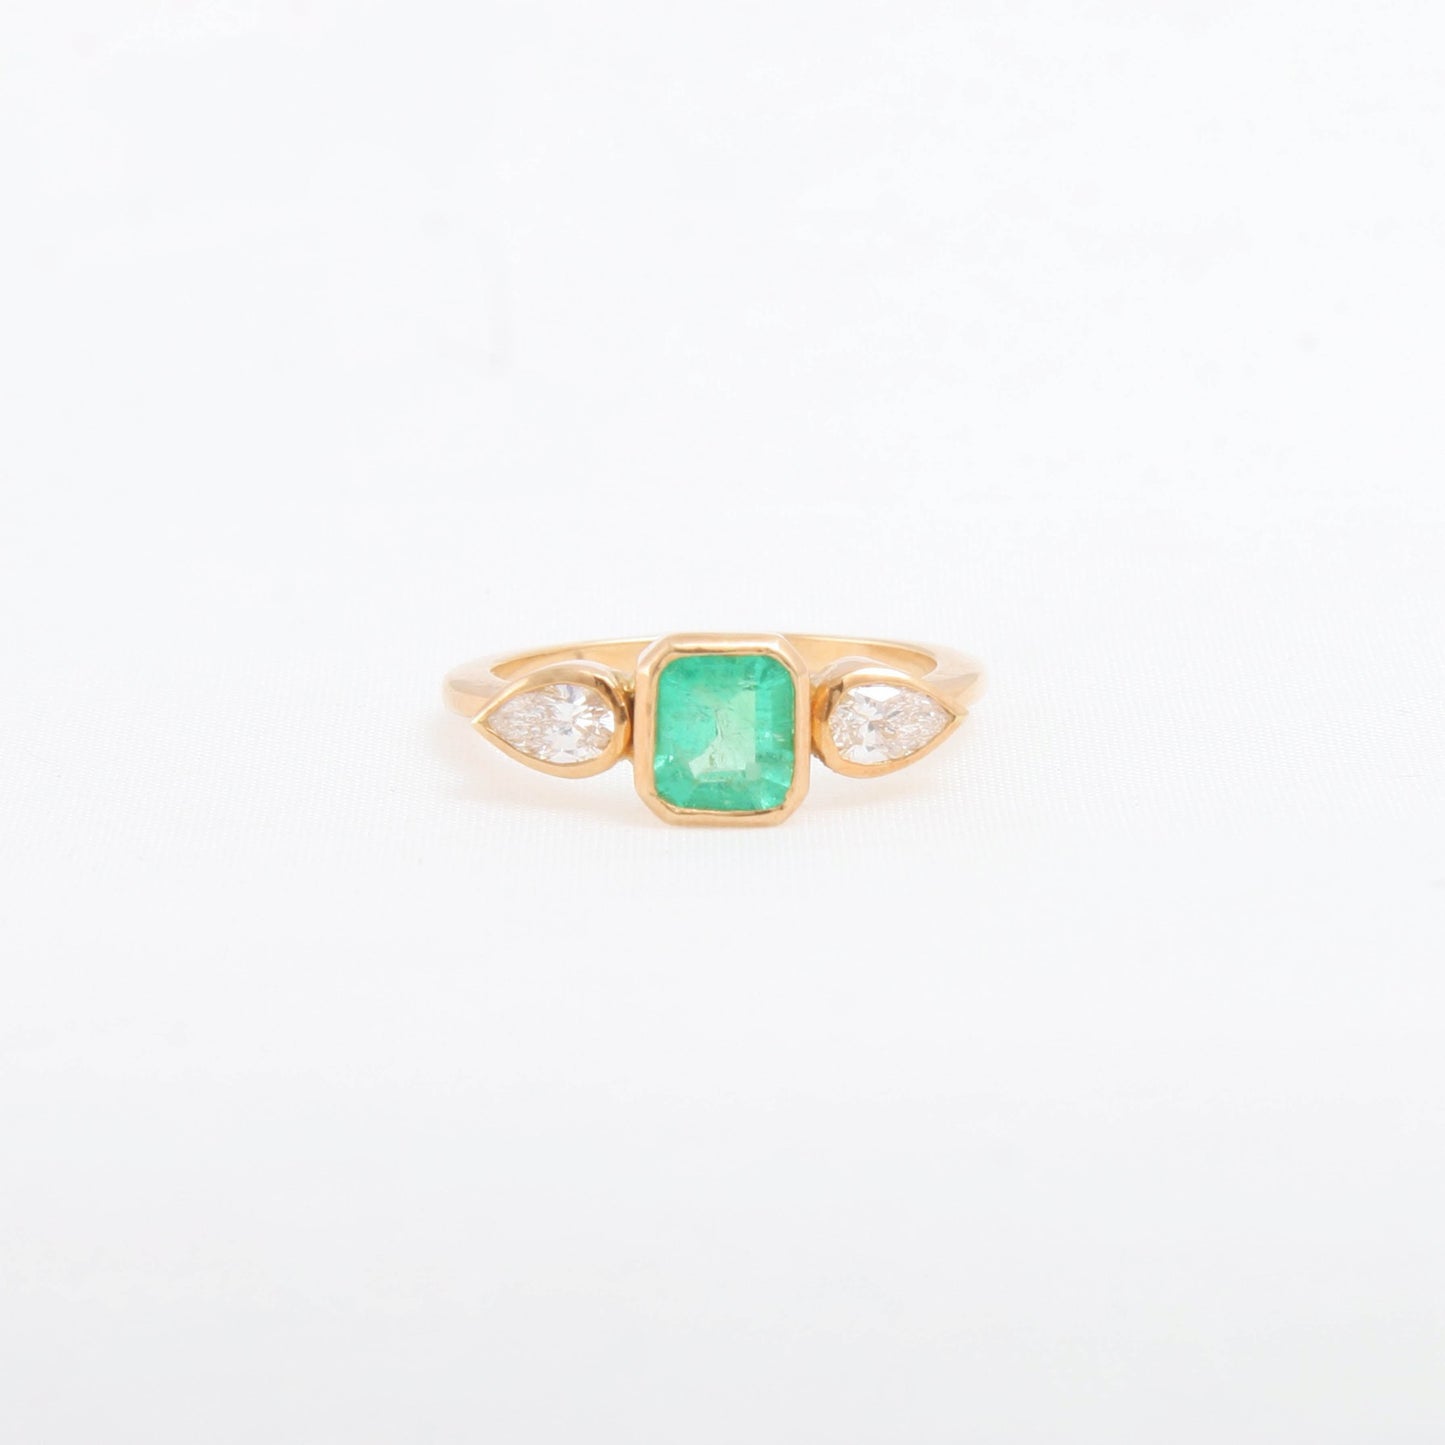 The Pradha Gold, Diamond and Emerald Ring by Rasvihar